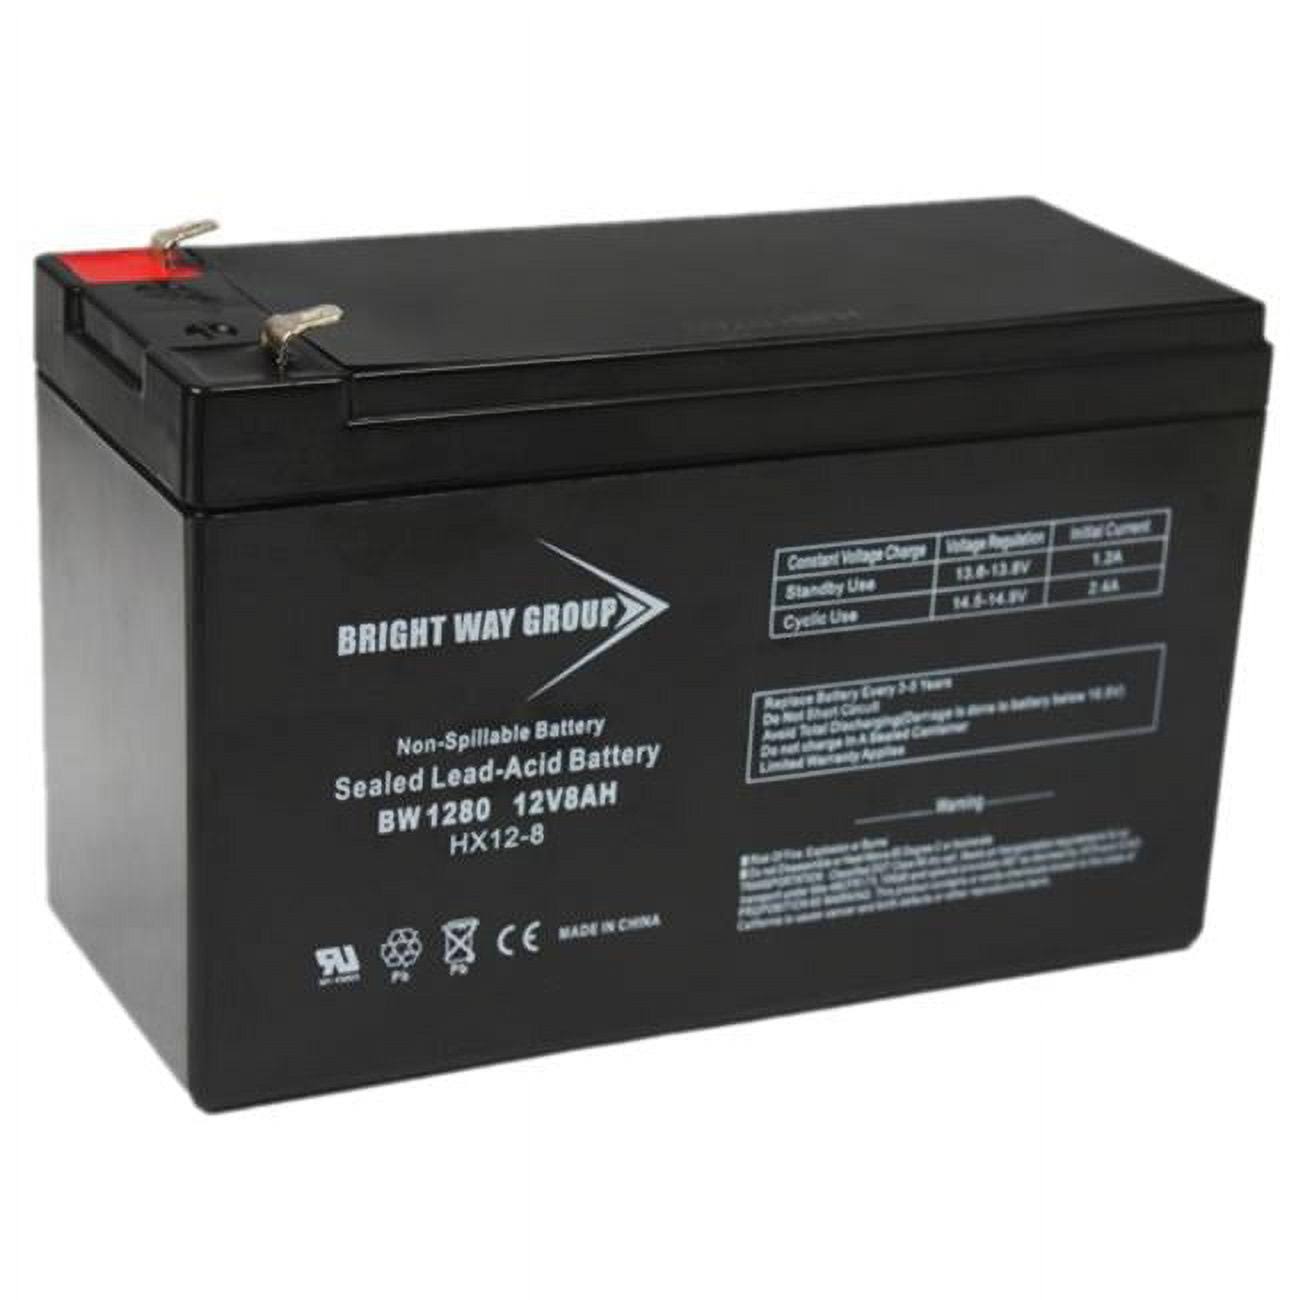 Bright Bw 1280 F1 (0158) 12V 8A Sld LD ACD Bat Bright Way Group Bw 1280 F1 0158 BWG 1280 F1 Battery